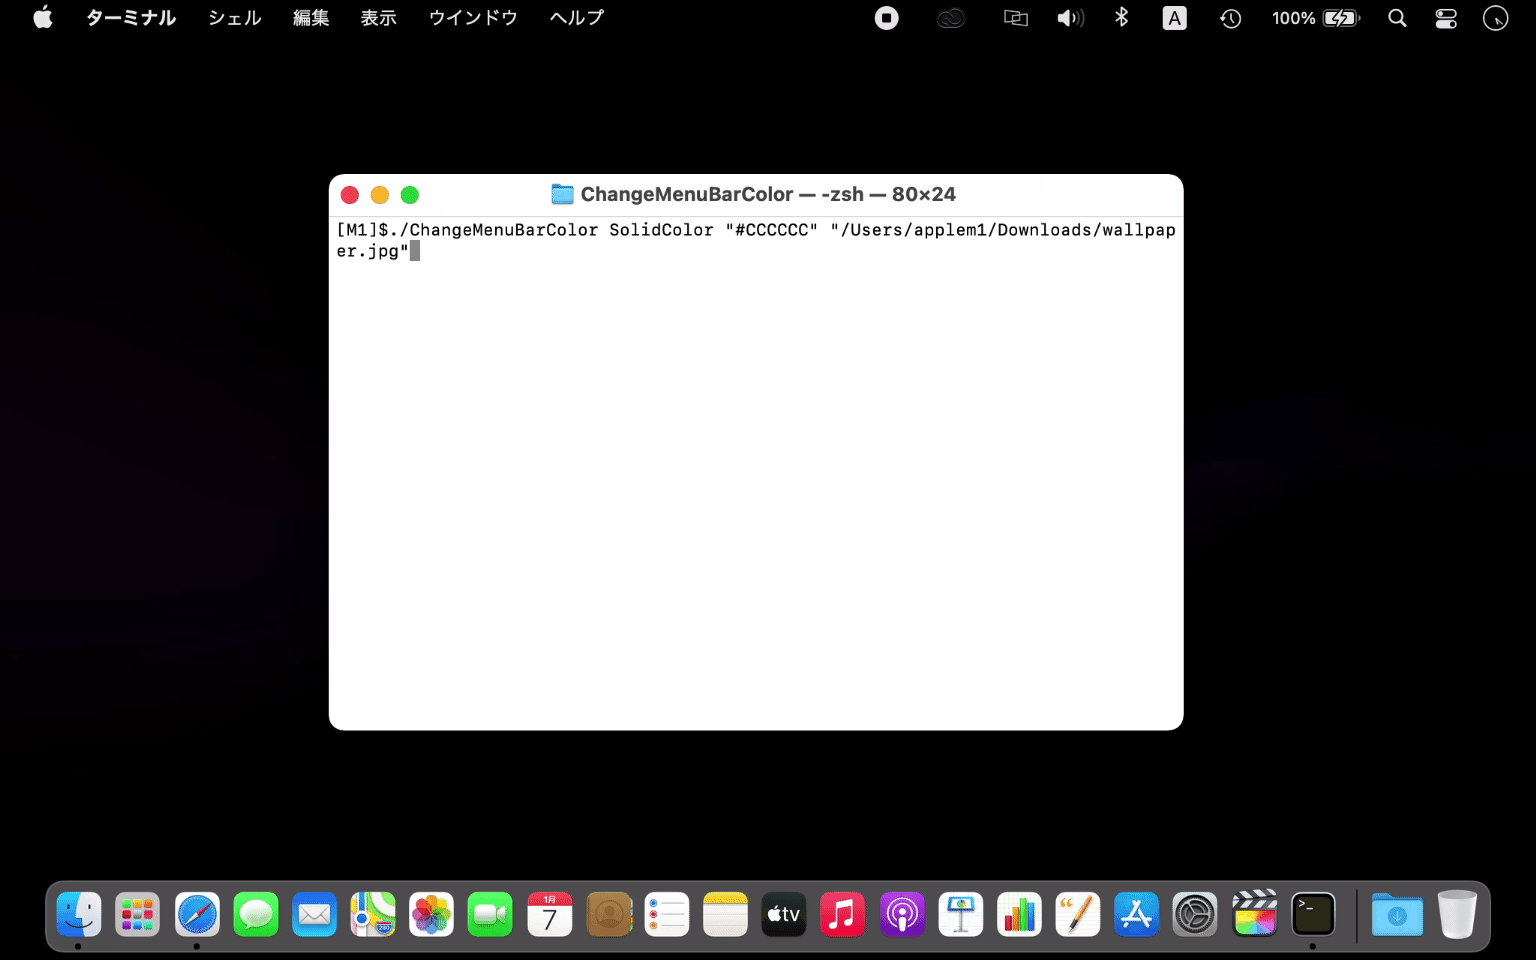 ChangeMenuBarColor for macOS 11 Big Sur